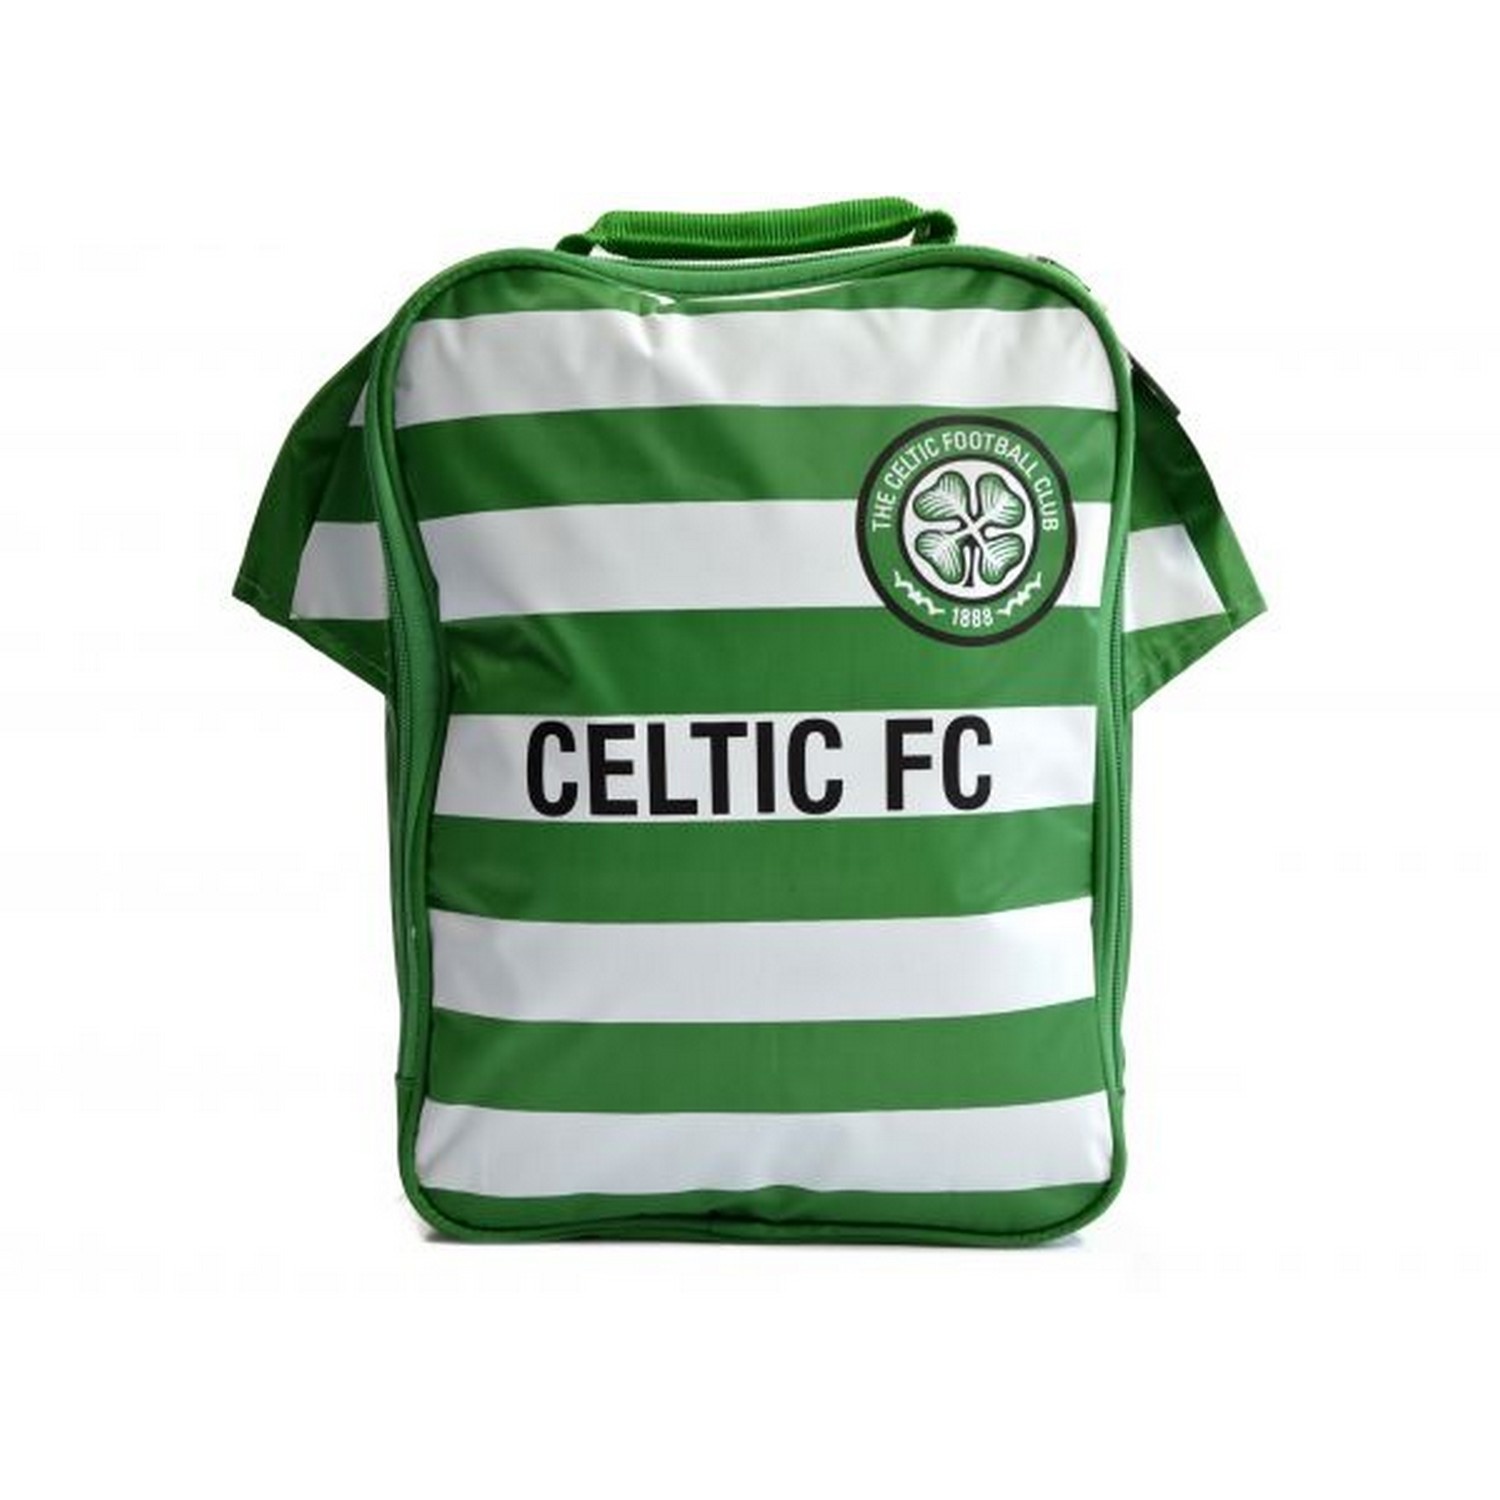 Lancheira Design Celtic Fc Licencias - verde-blanco - 